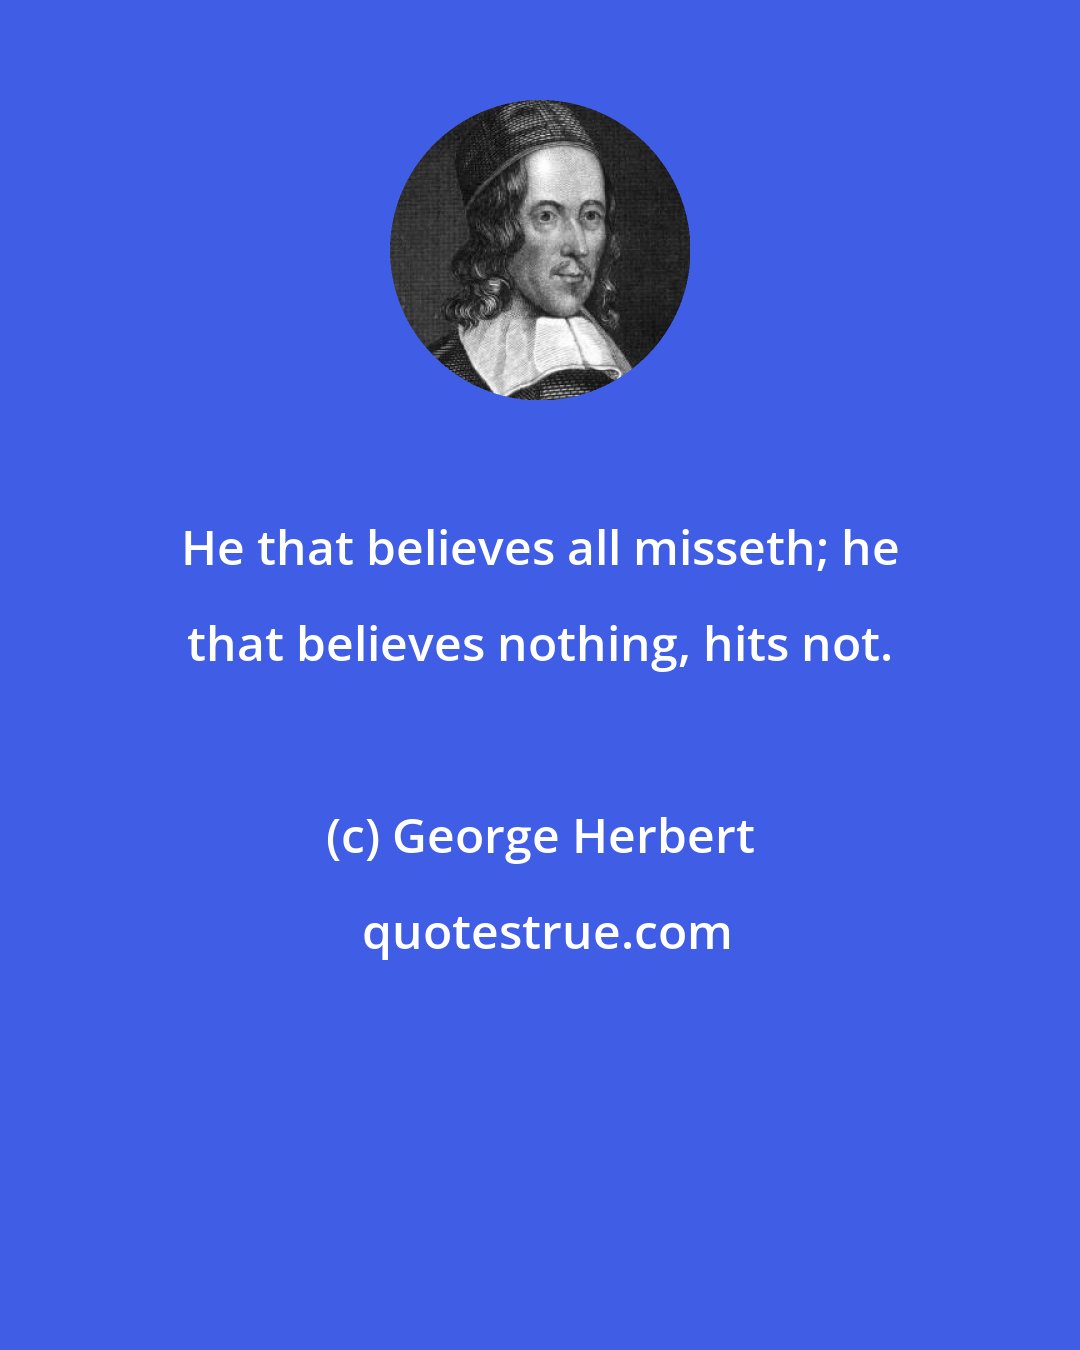 George Herbert: He that believes all misseth; he that believes nothing, hits not.